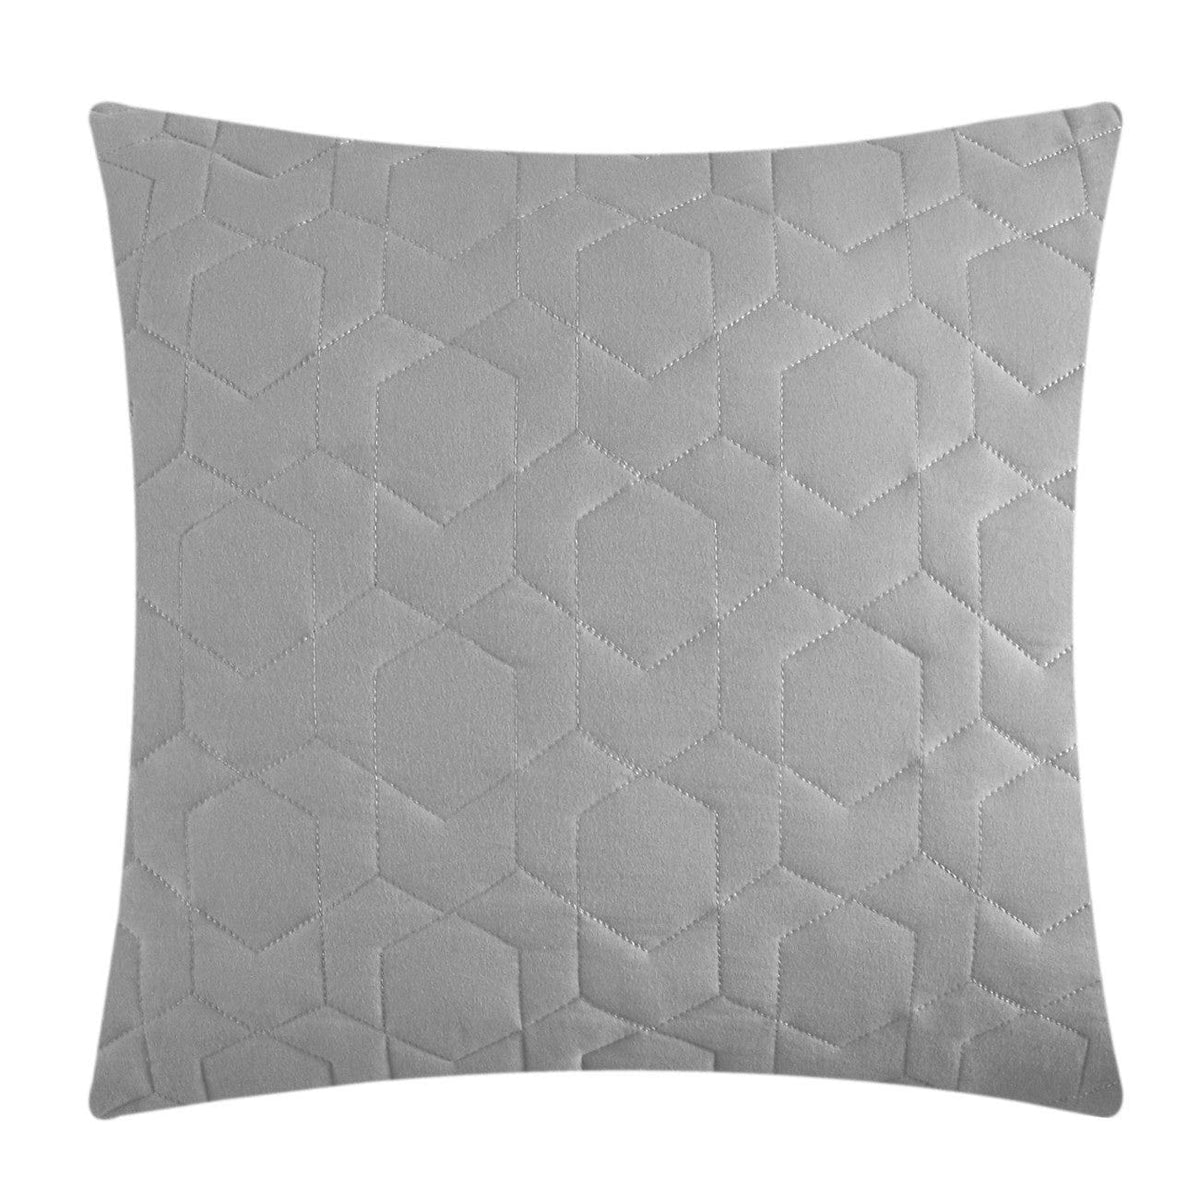 NY&C Home Davina 9 Piece Geometric Comforter Set 